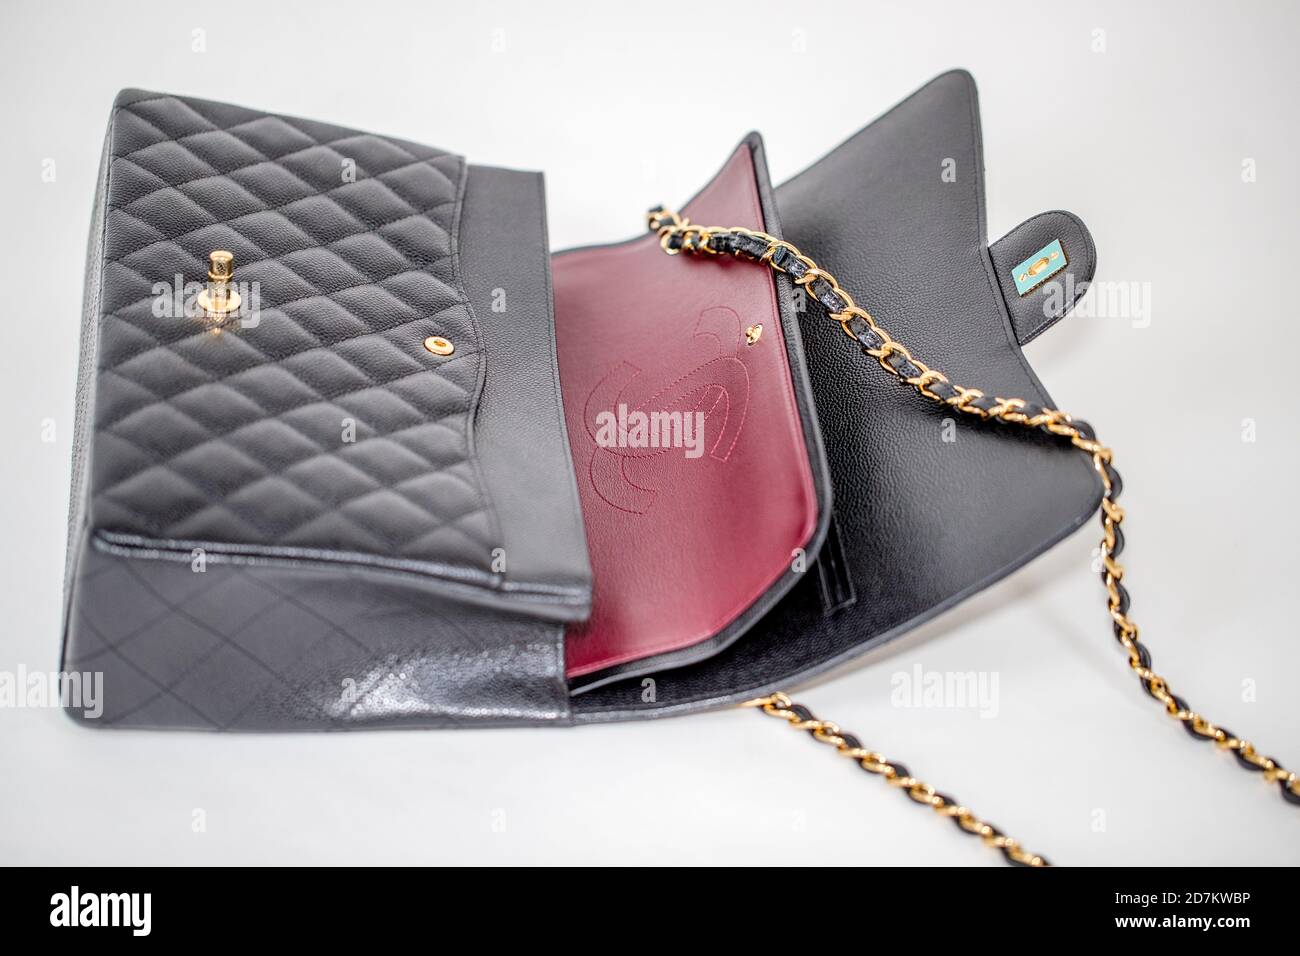 chanel handbags 2019